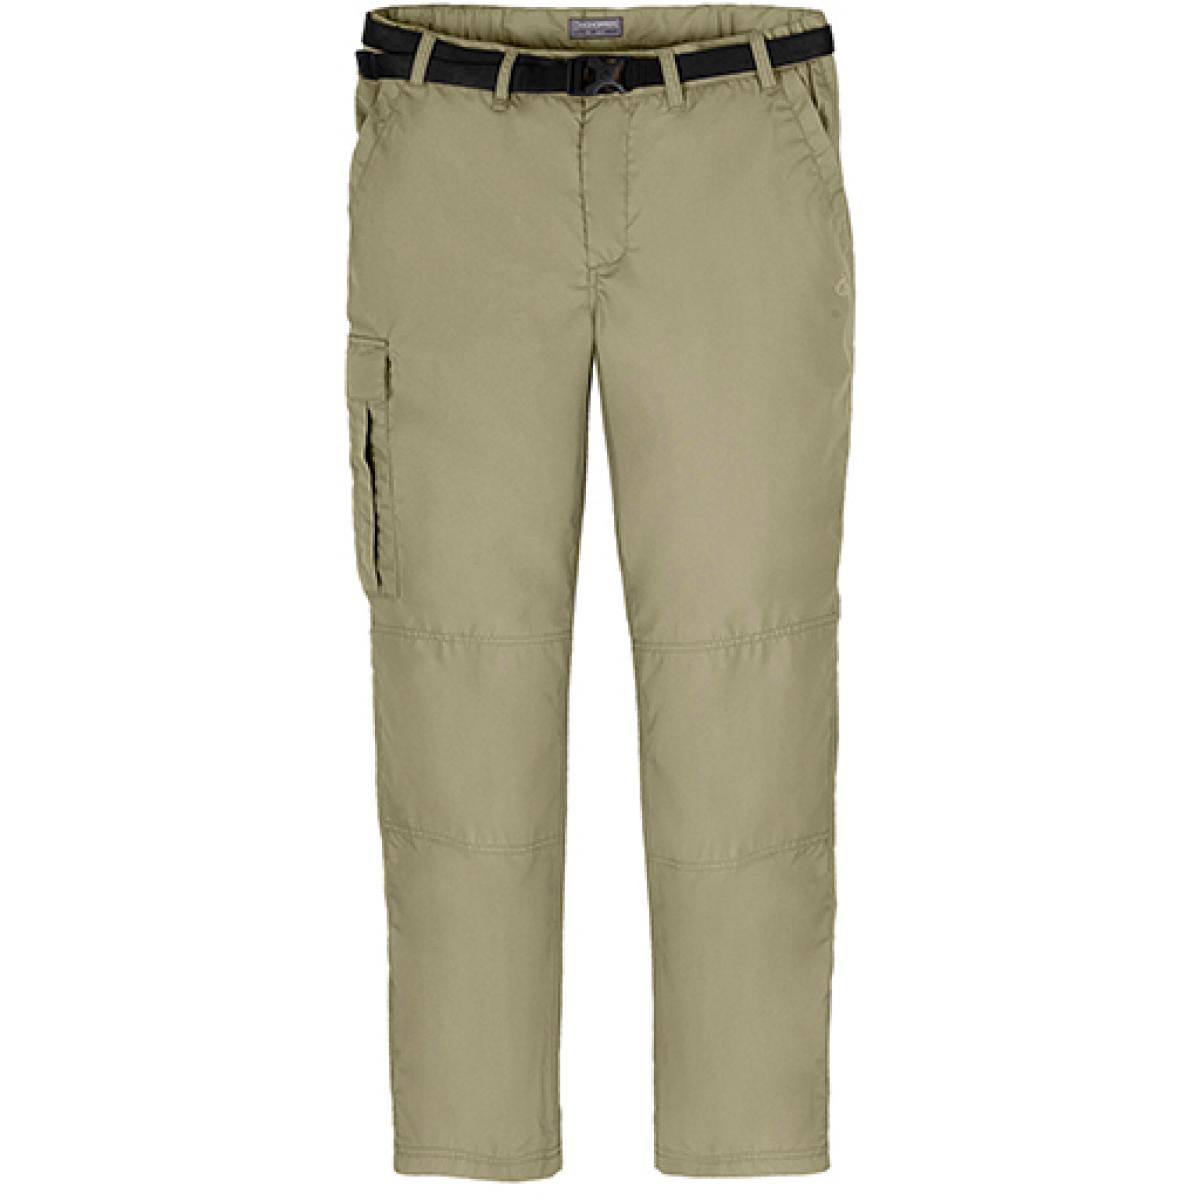 Hersteller: Craghoppers Expert Herstellernummer: CEJ001 Artikelbezeichnung: Expert Kiwi Tailored Trousers - Arbeithose Farbe: Pebble